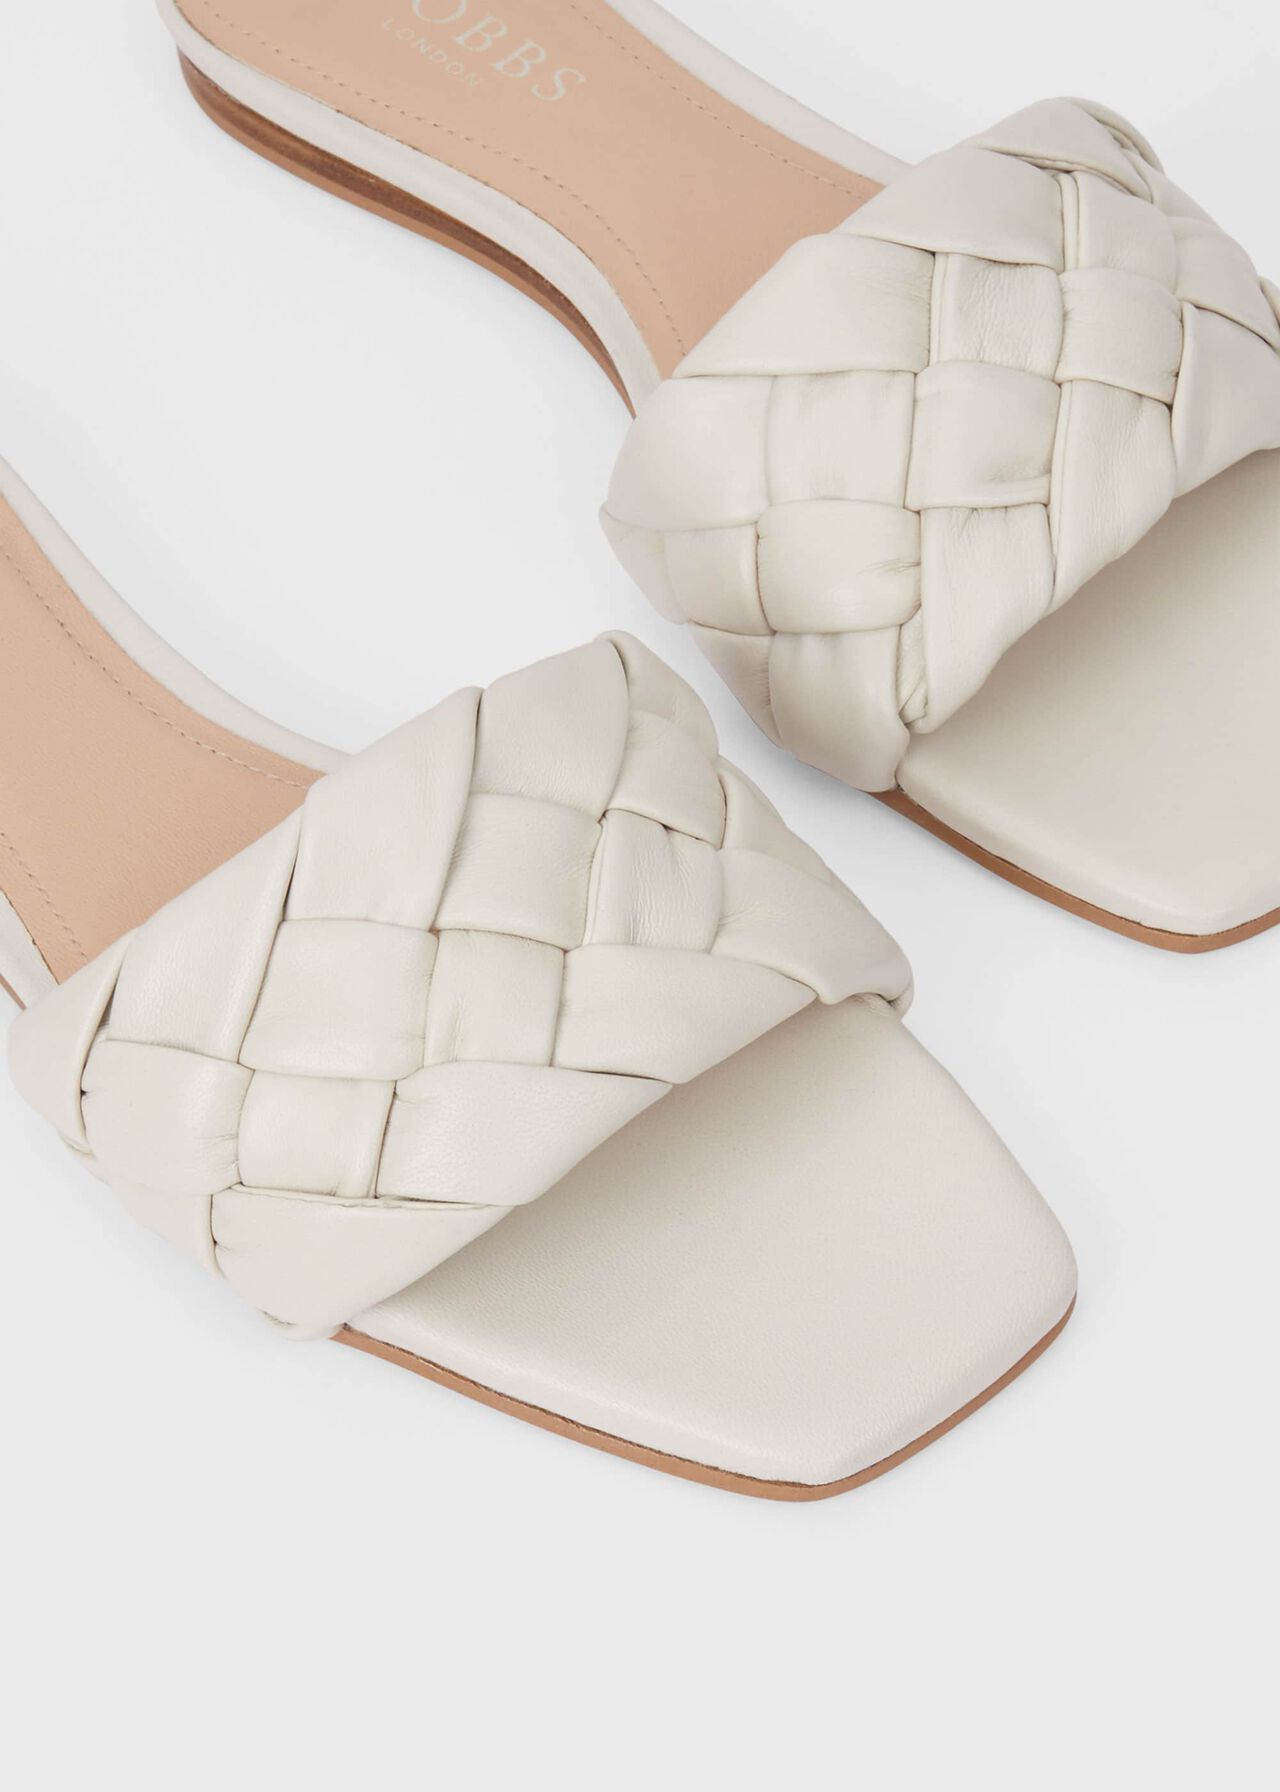 Wren Leather Sandals, White, hi-res